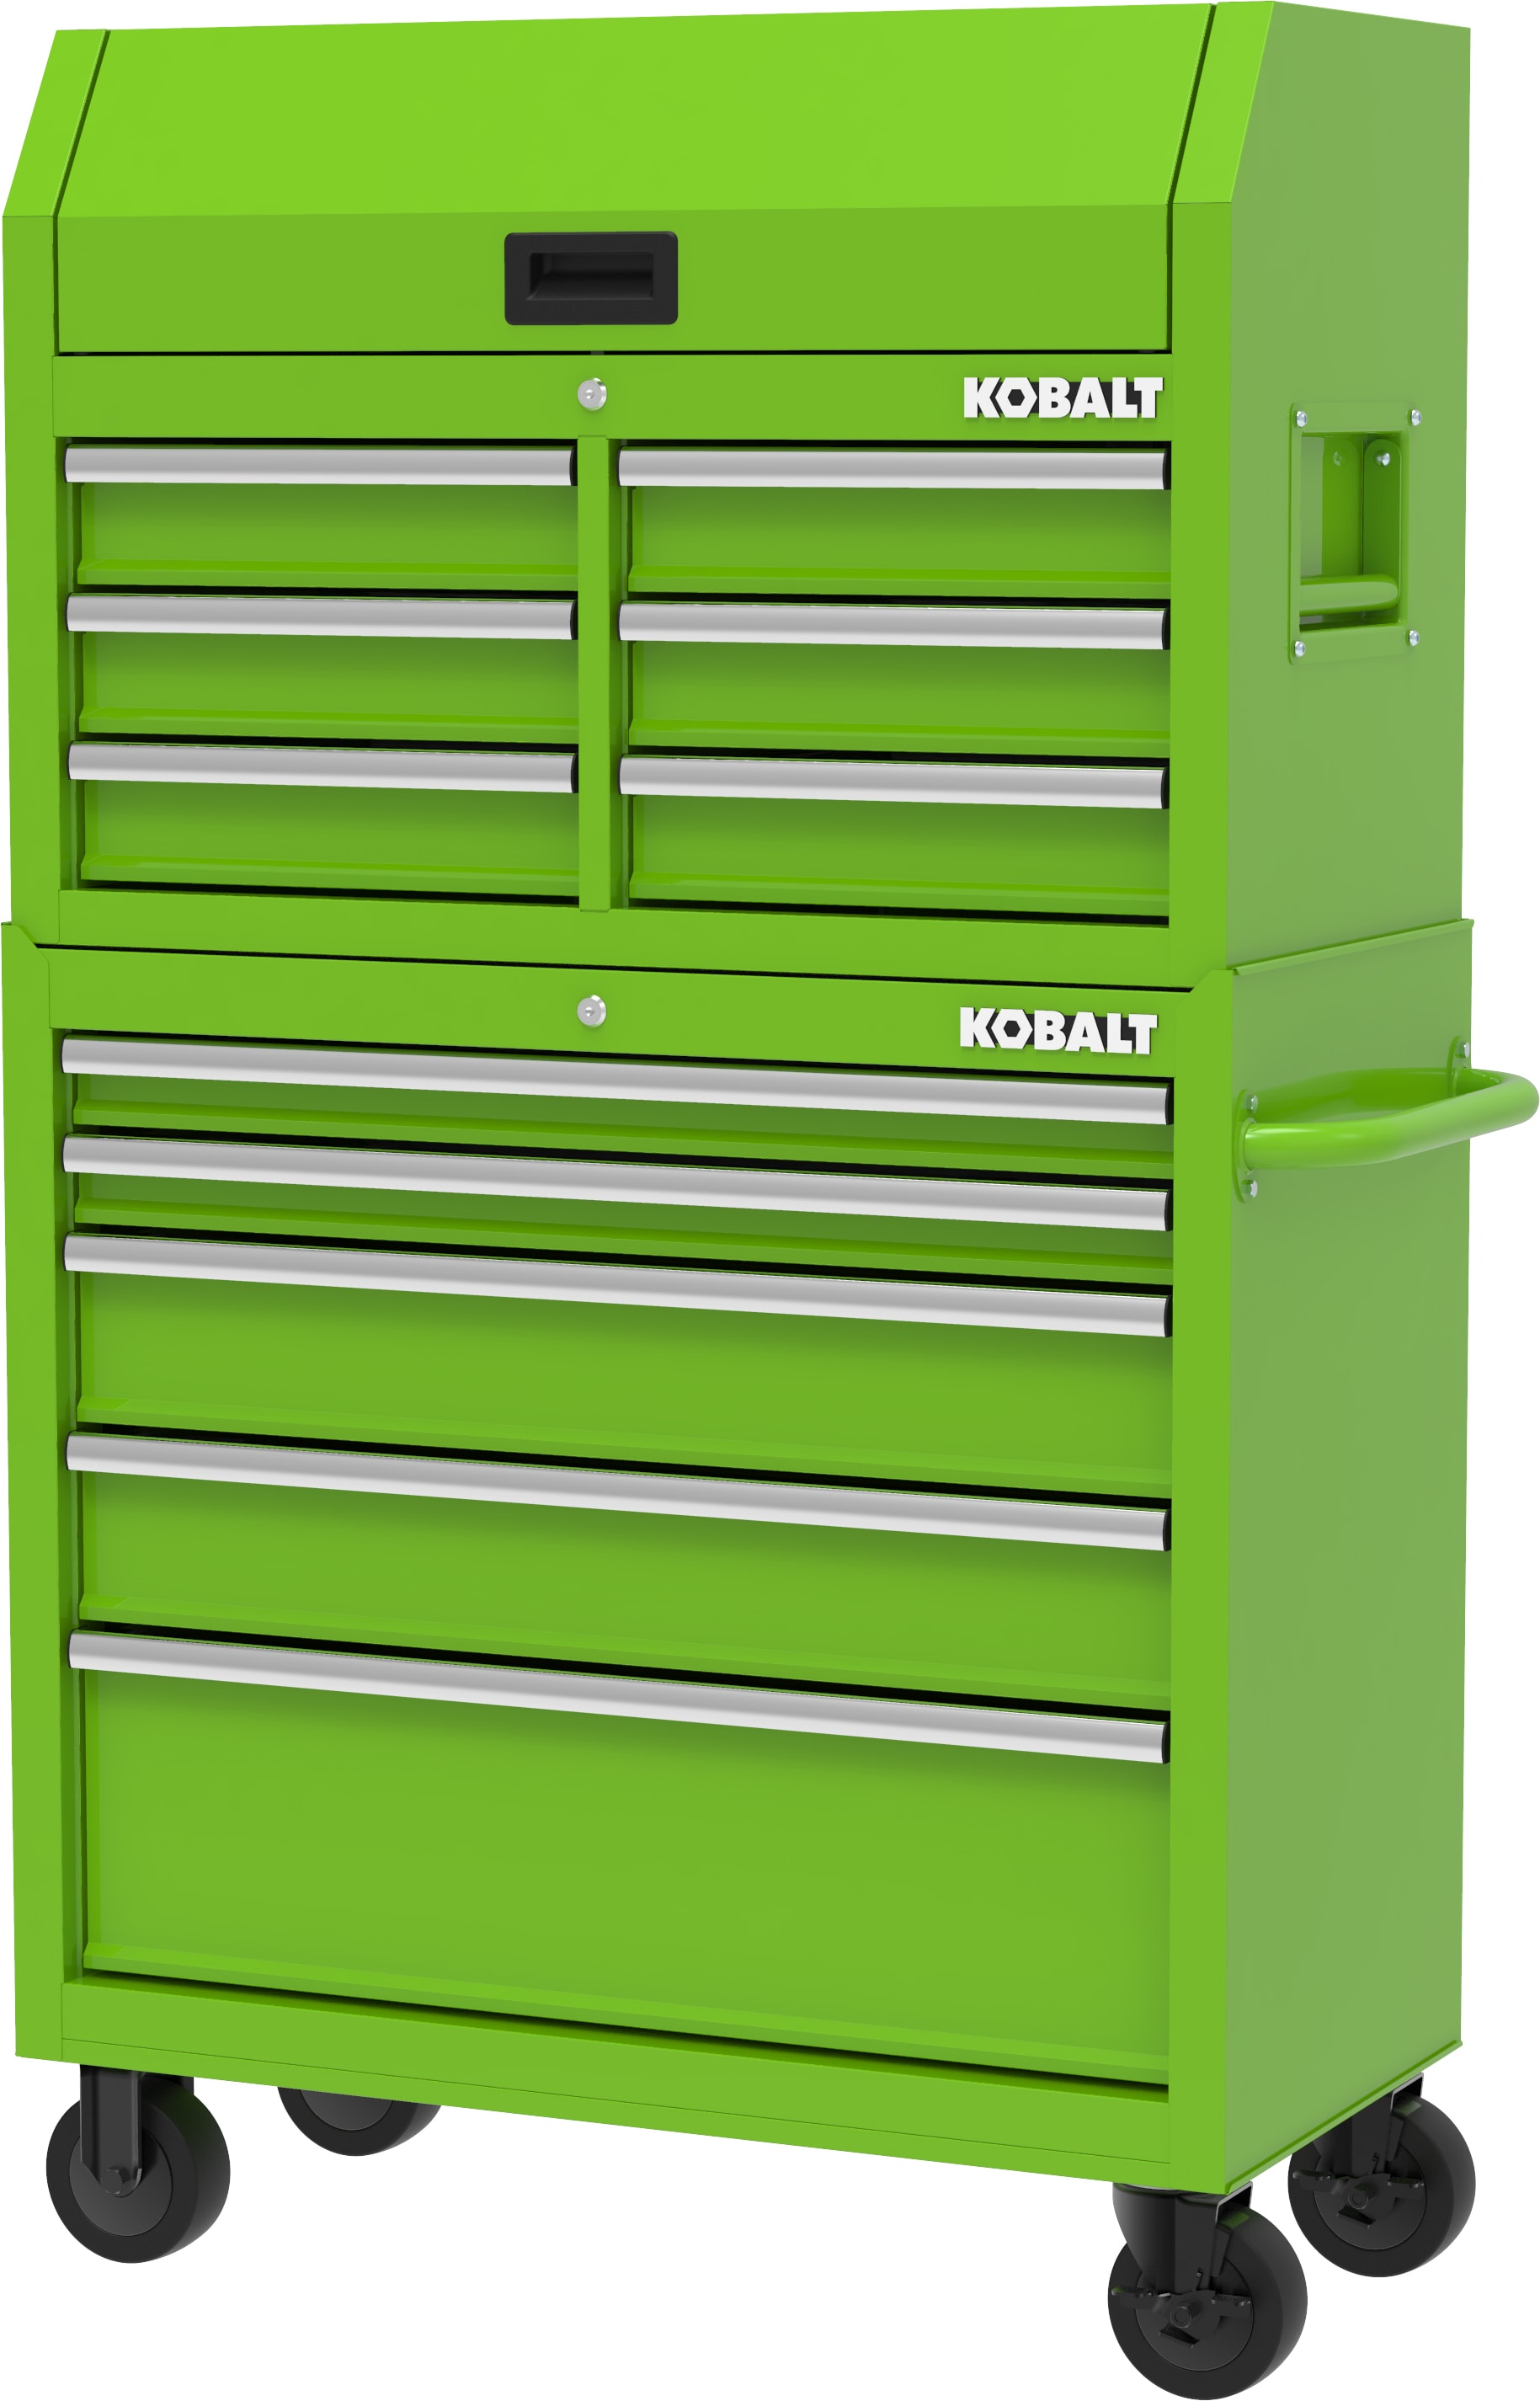 Kobalt Other Tools Storage